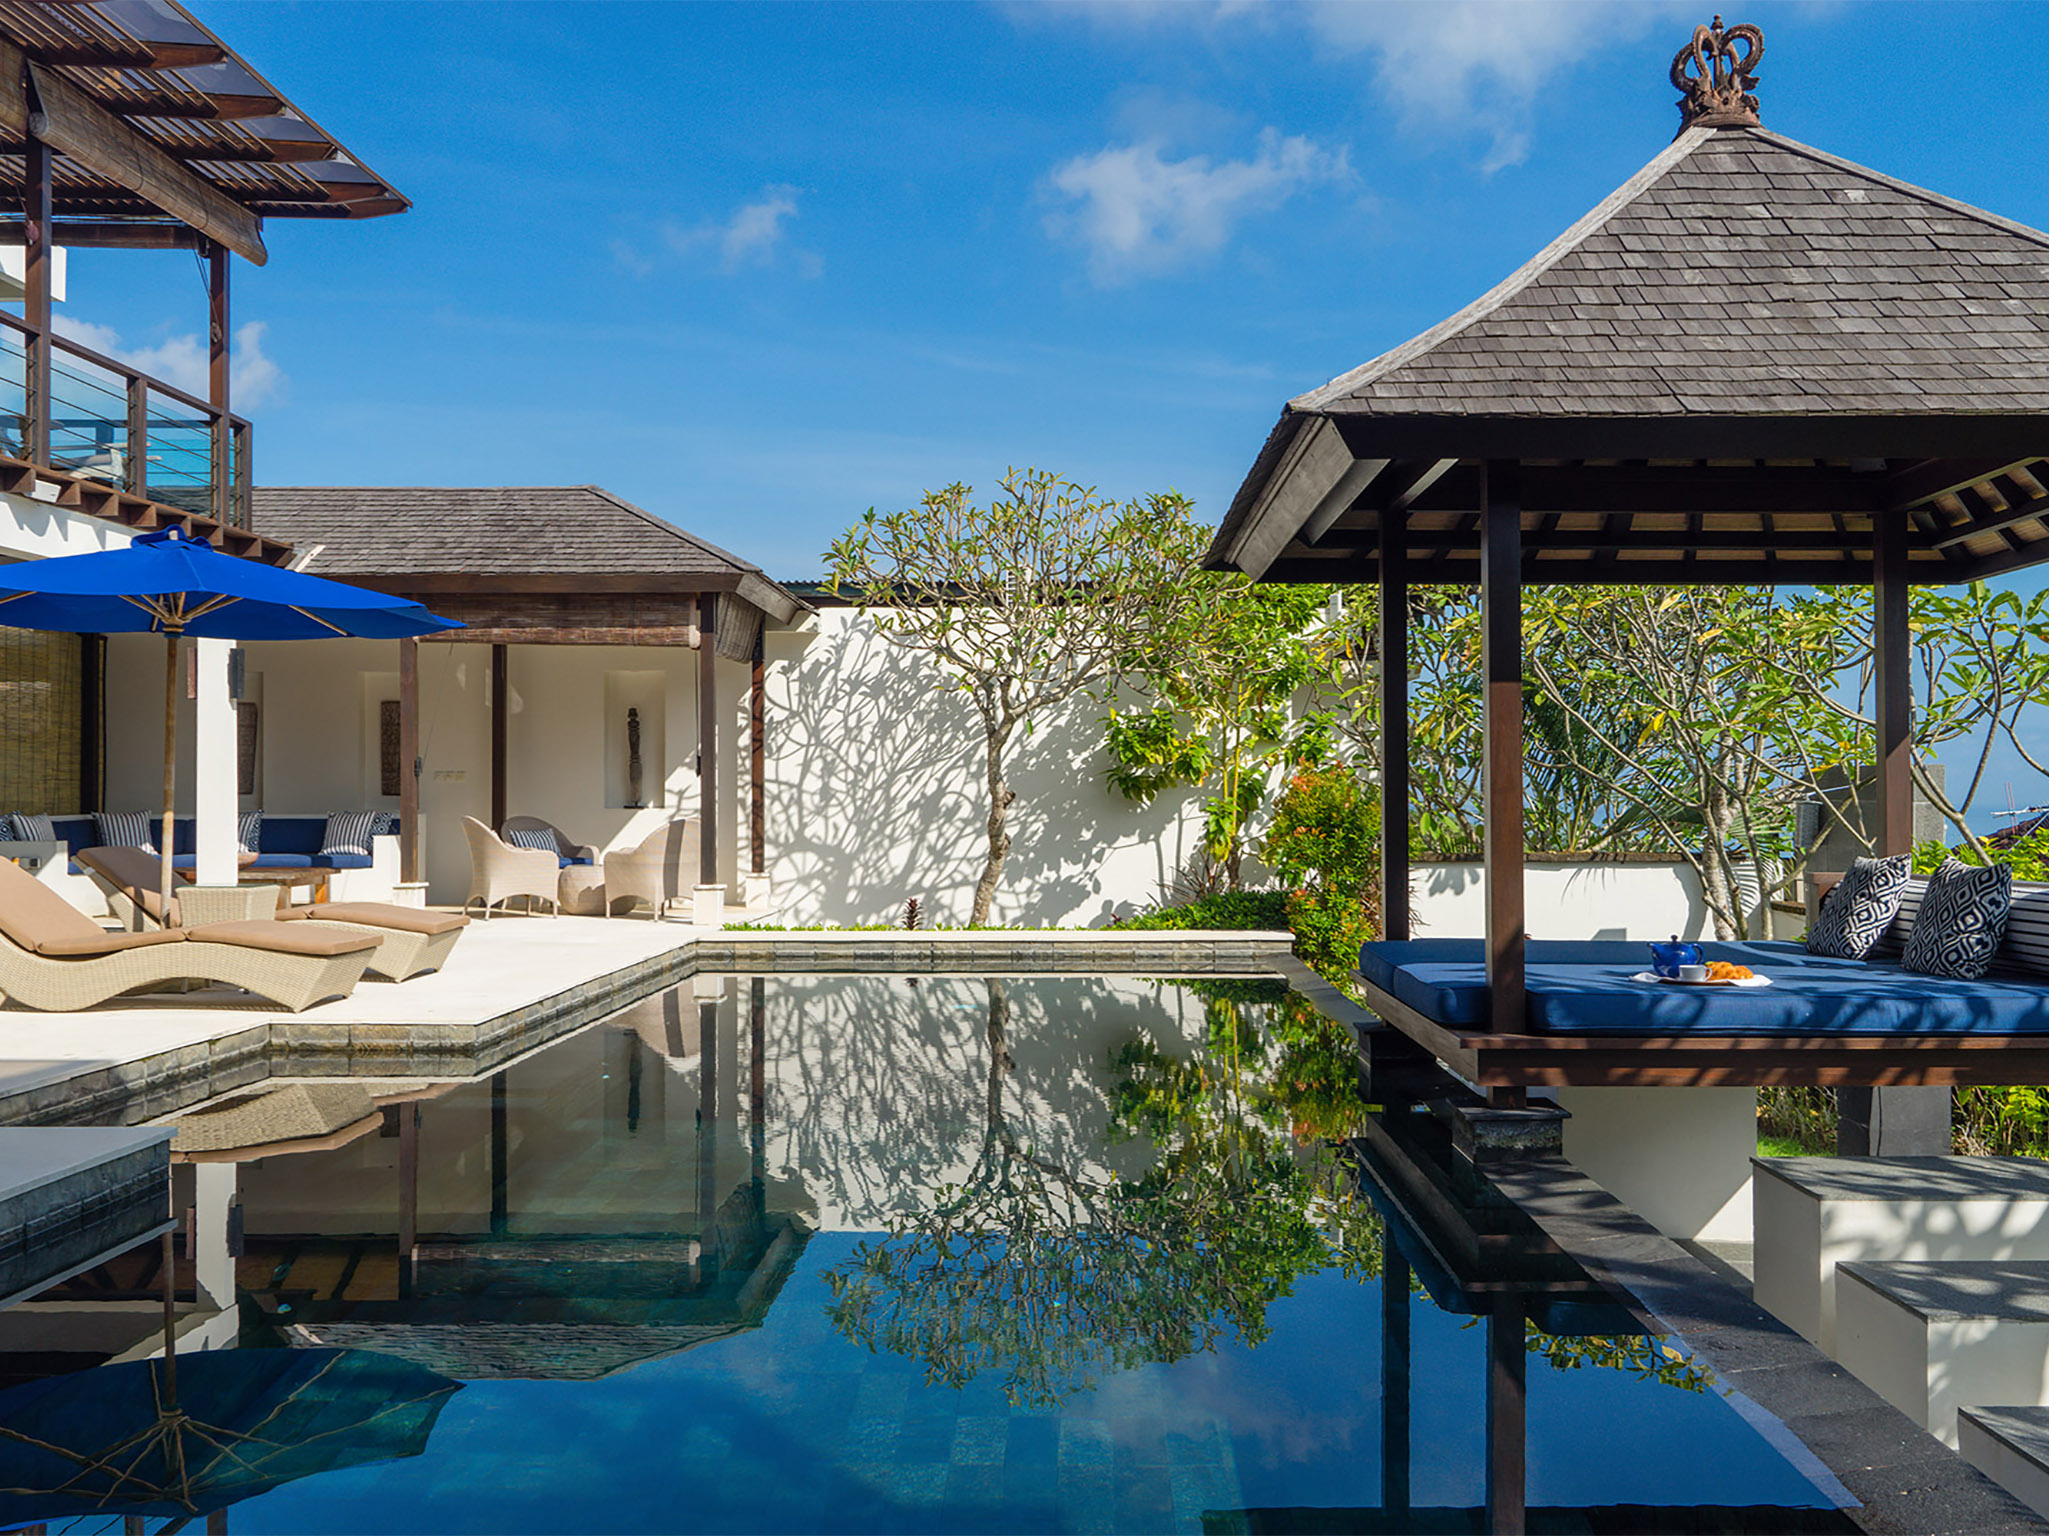 Photo Gallery | Villa Adenium - Jimbaran 4 bedroom luxury villa, Bali